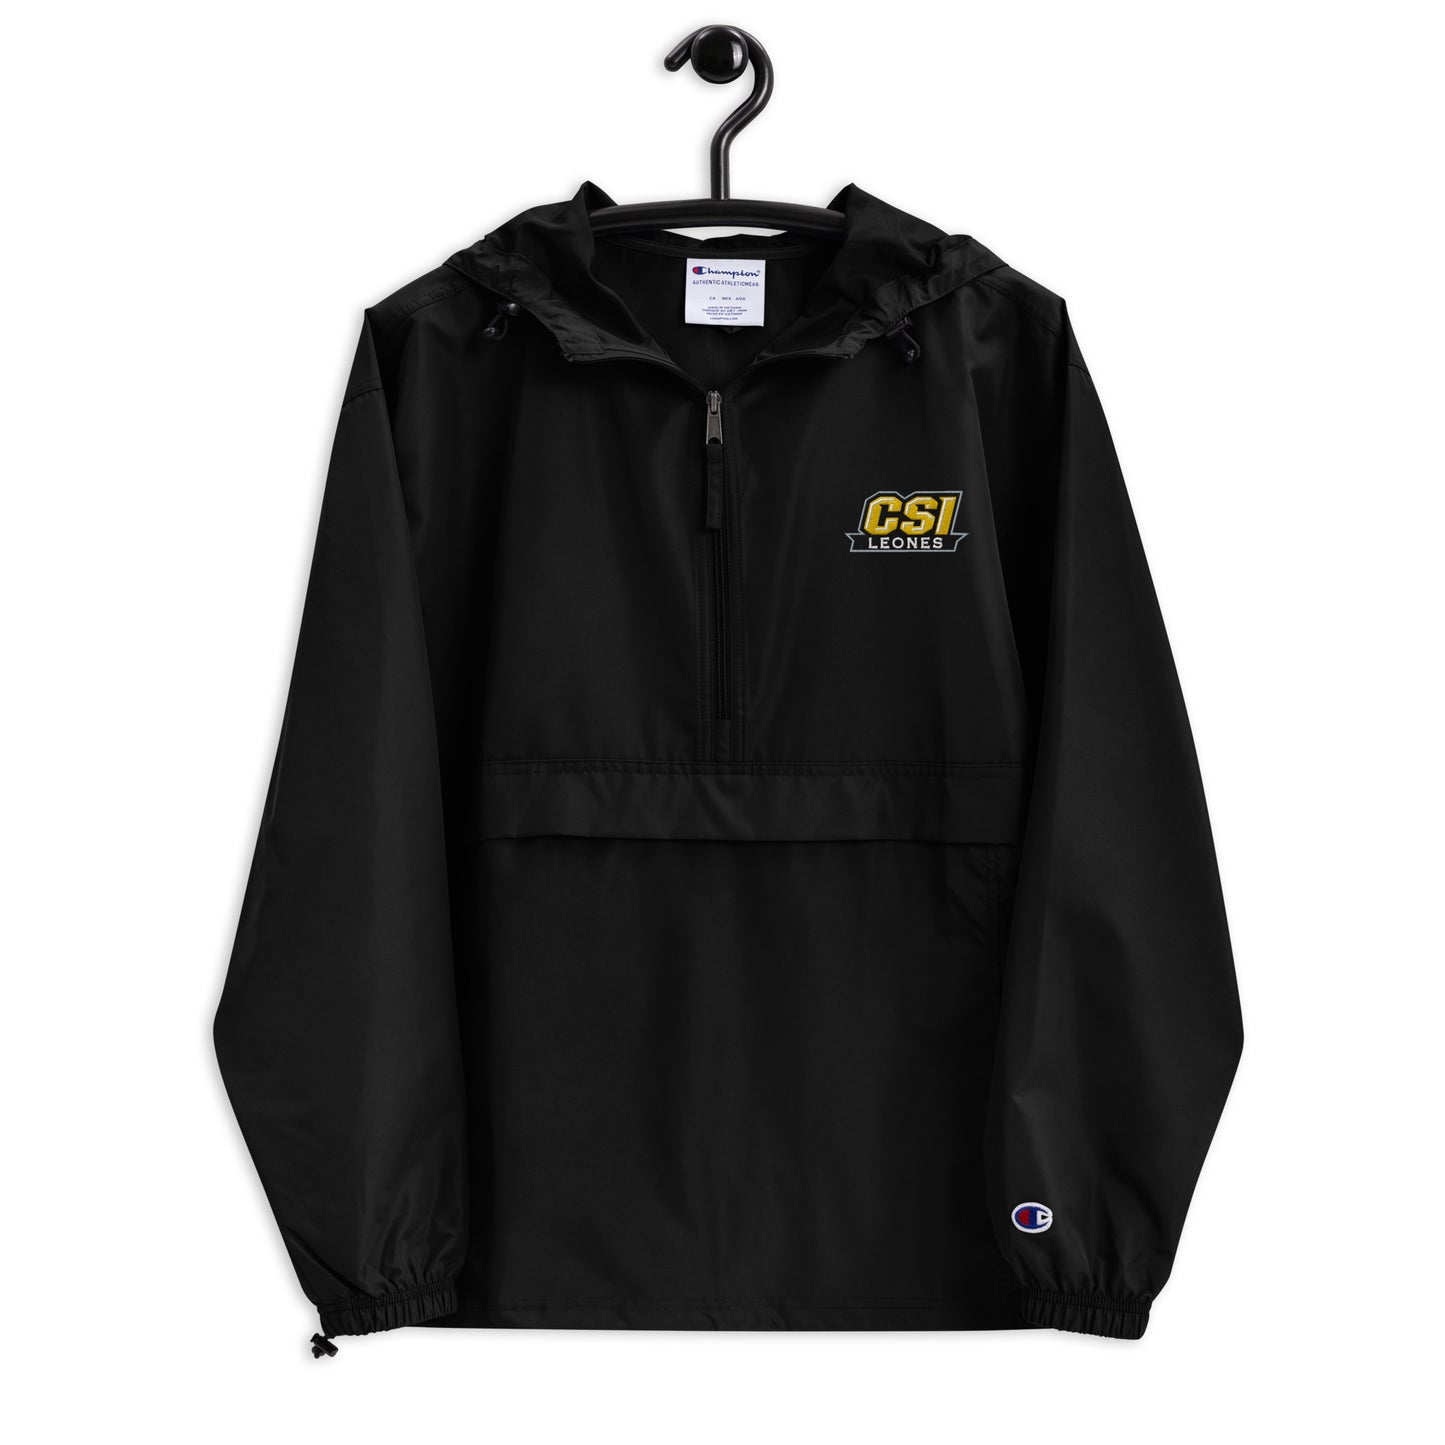 CSI - Leones Embroidered Pull Over Jacket